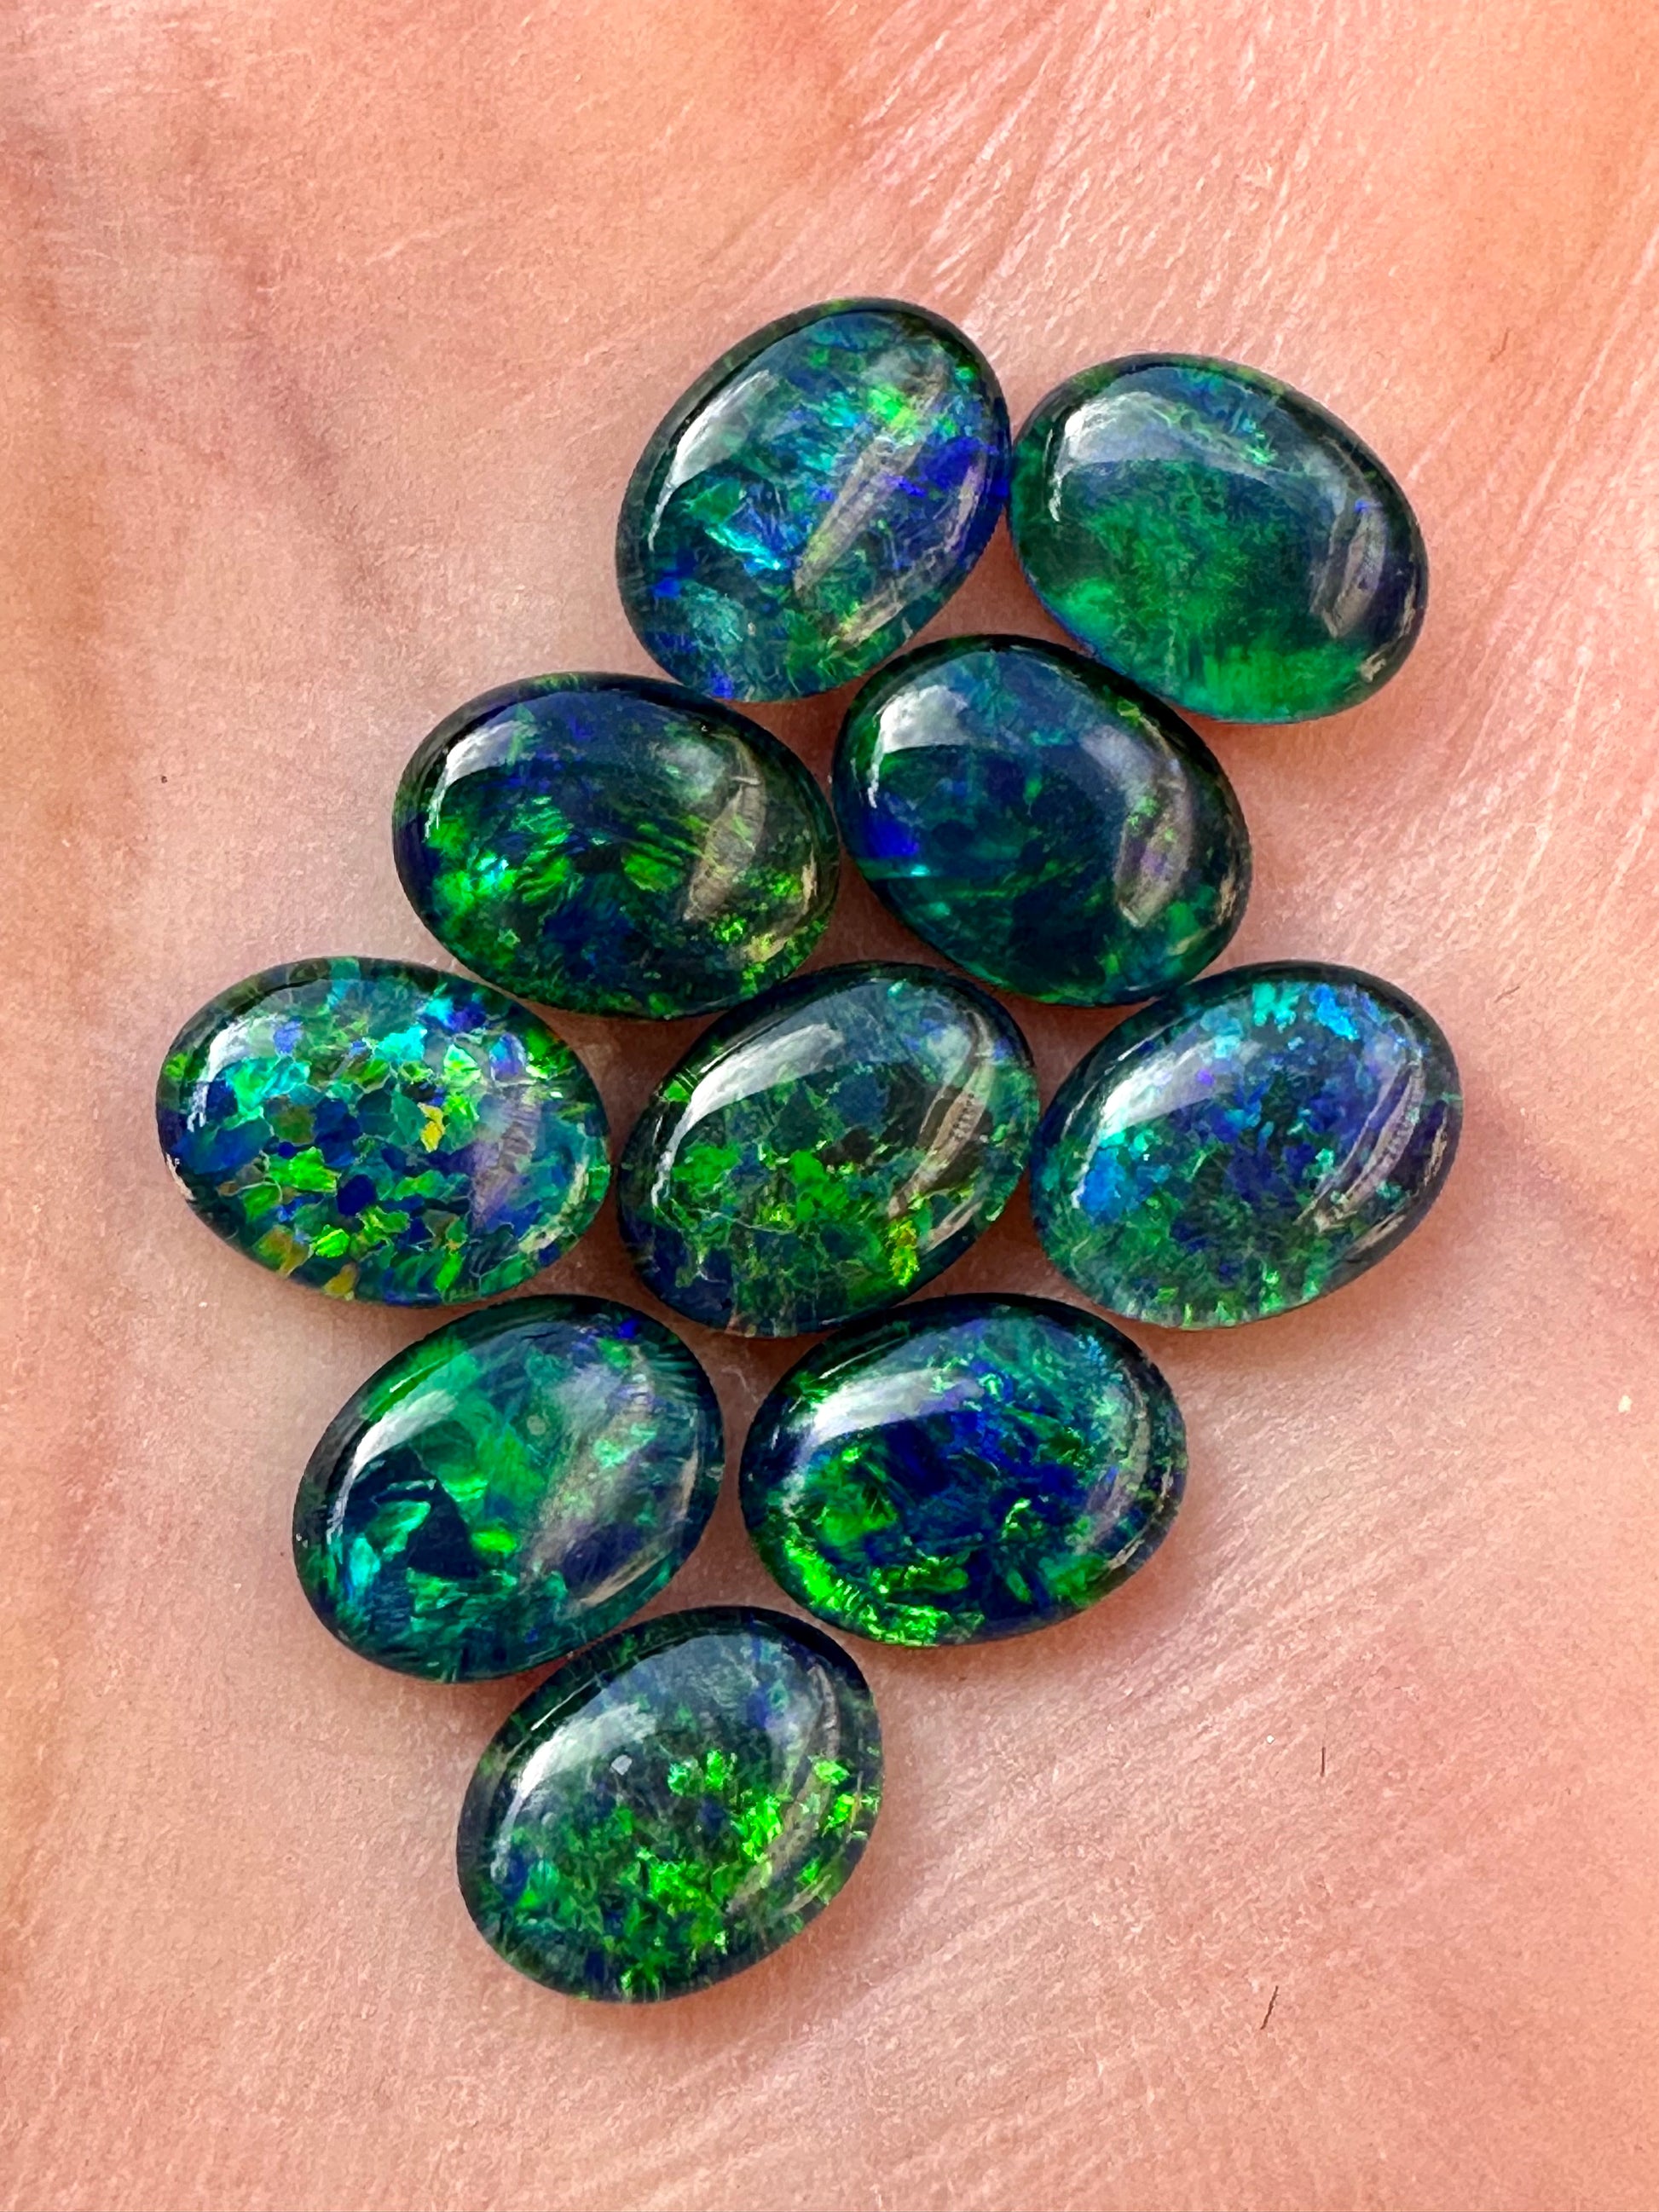 5 Gorgeous Lightning Ridge Opal Doublets